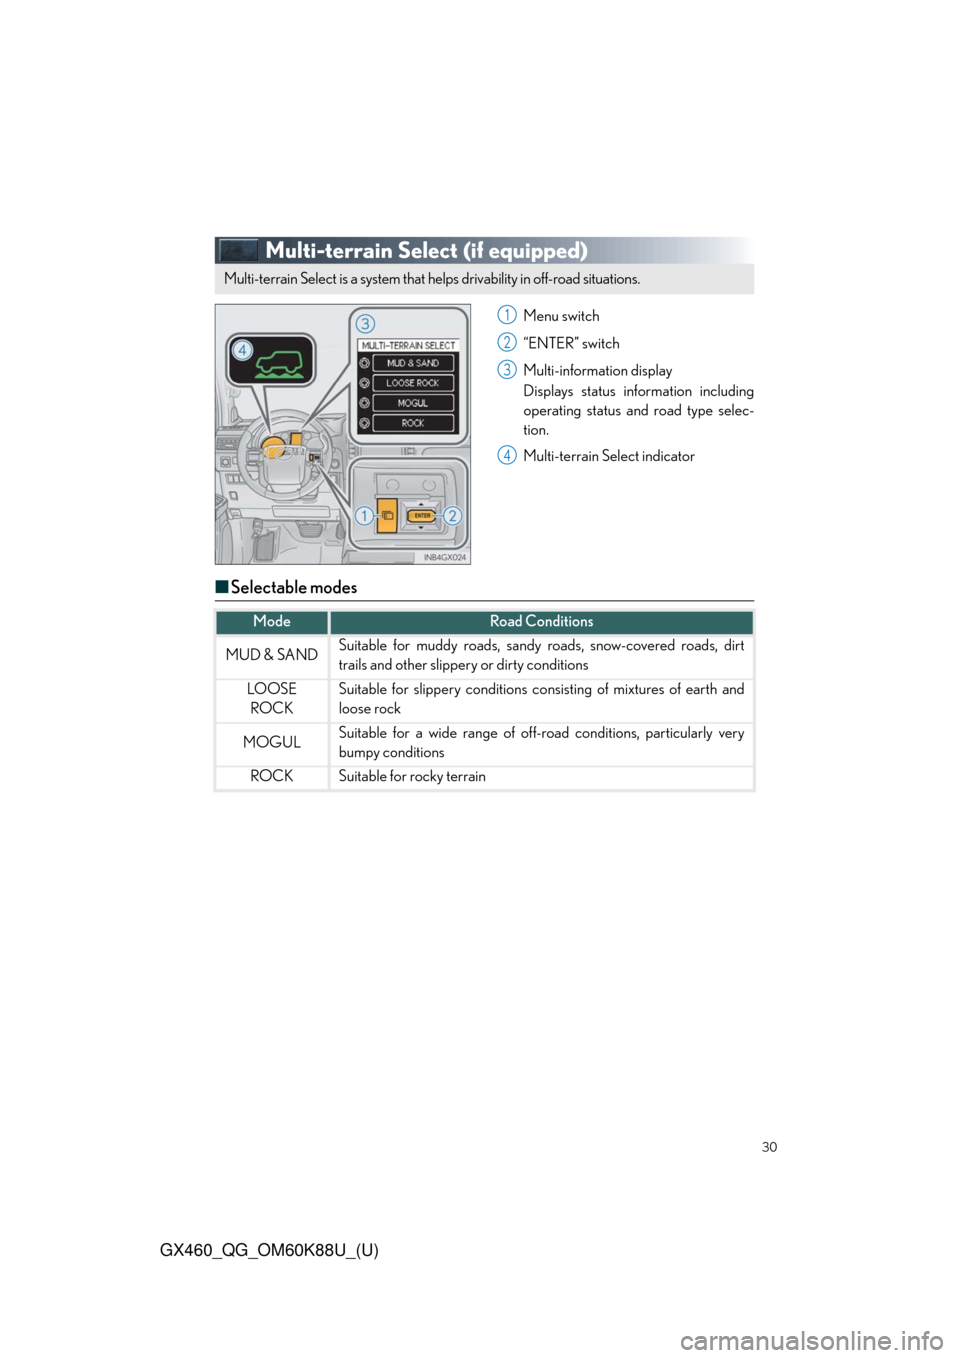 Lexus GX460 2014  Key information / LEXUS 2014 GX460 QUICK GUIDE  (OM60K88U) Owners Manual 30
GX460_QG_OM60K88U_(U)
Multi-terrain Select (if equipped)
Menu switch
“ENTER” switch
Multi-information display
Displays status information including
operating status and road type selec-
tion.
M